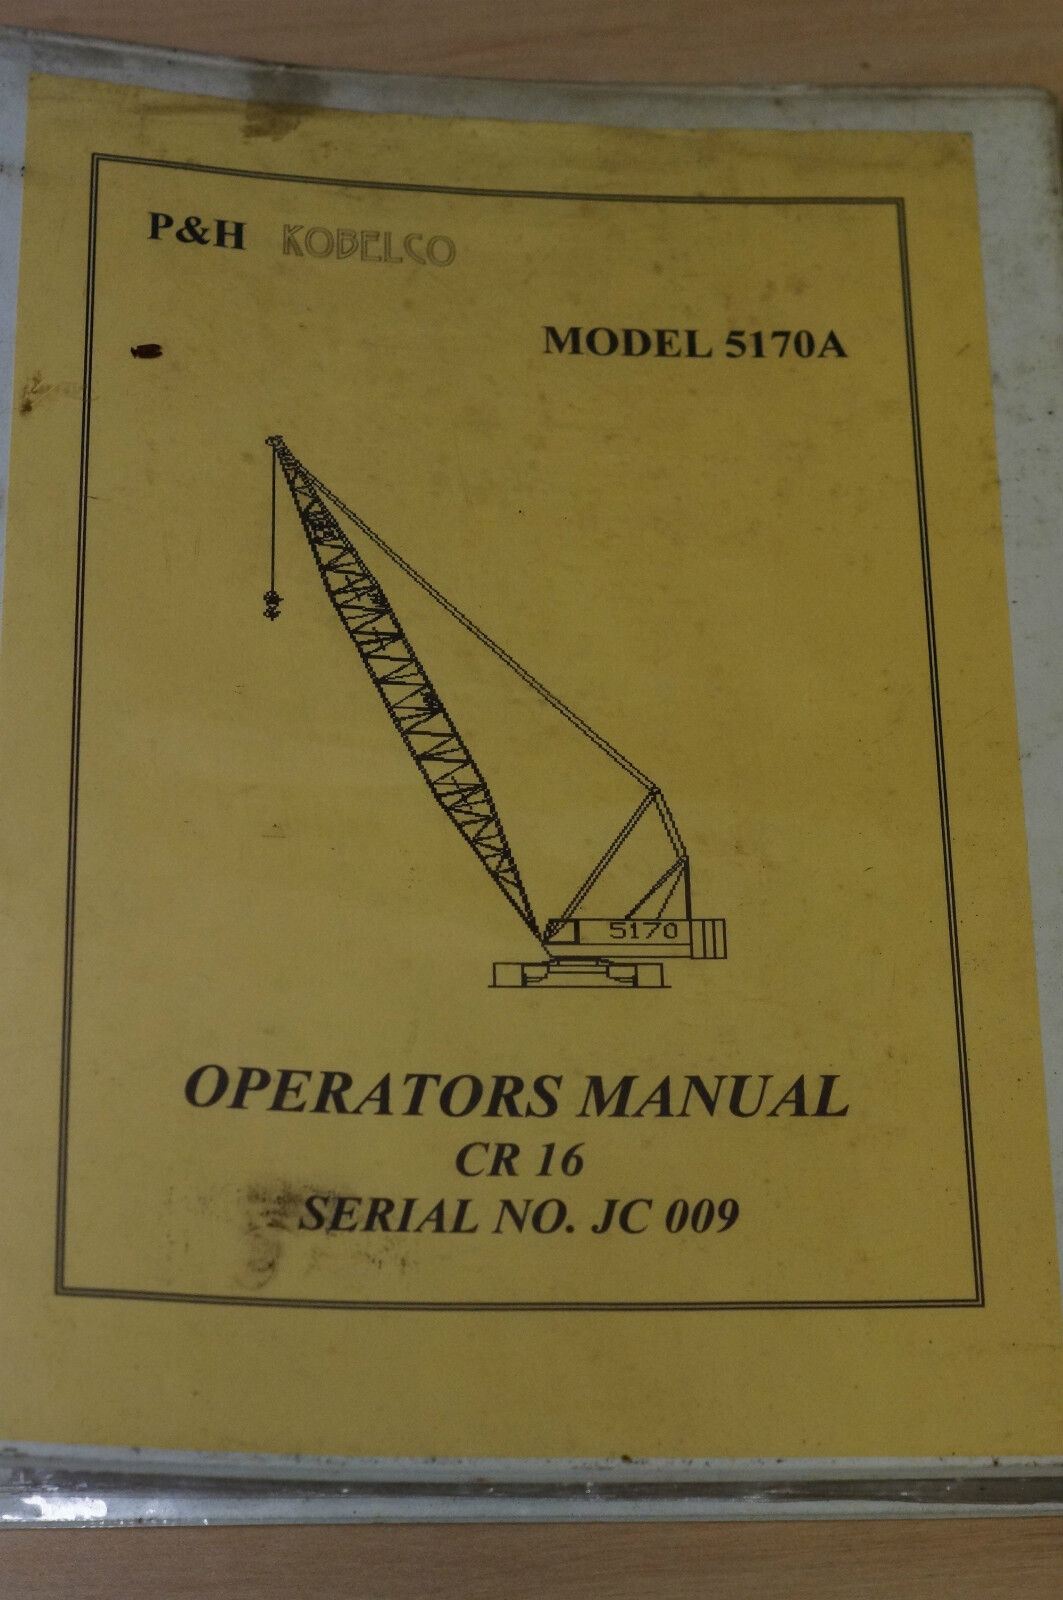 Kobelco Operators Manual CR16 Model:5170A